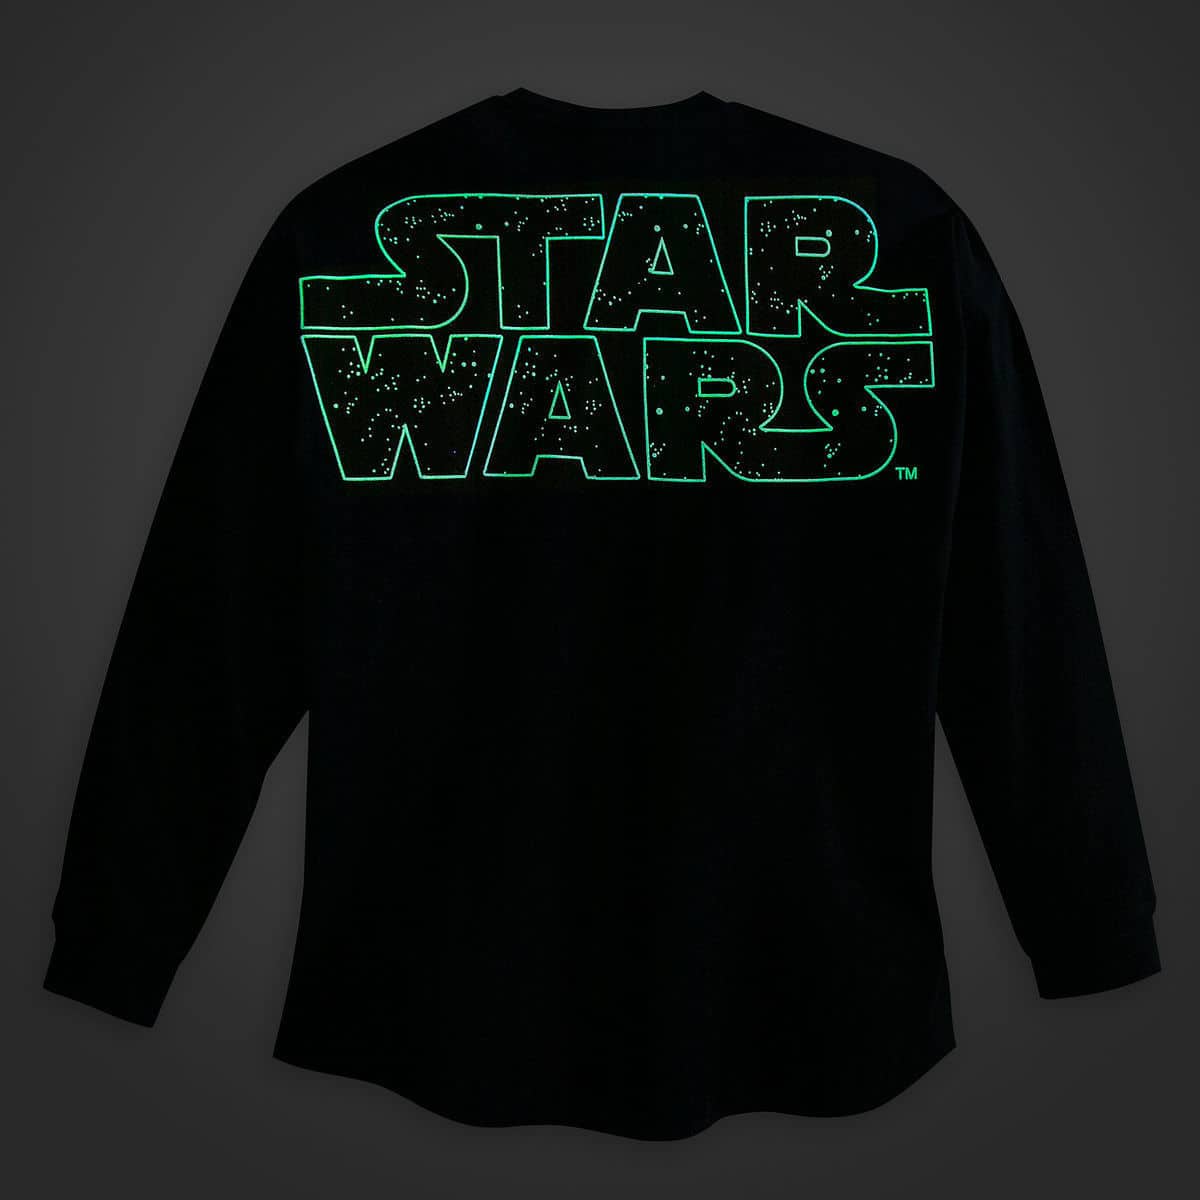 Star Wars spirit jersey glow - back